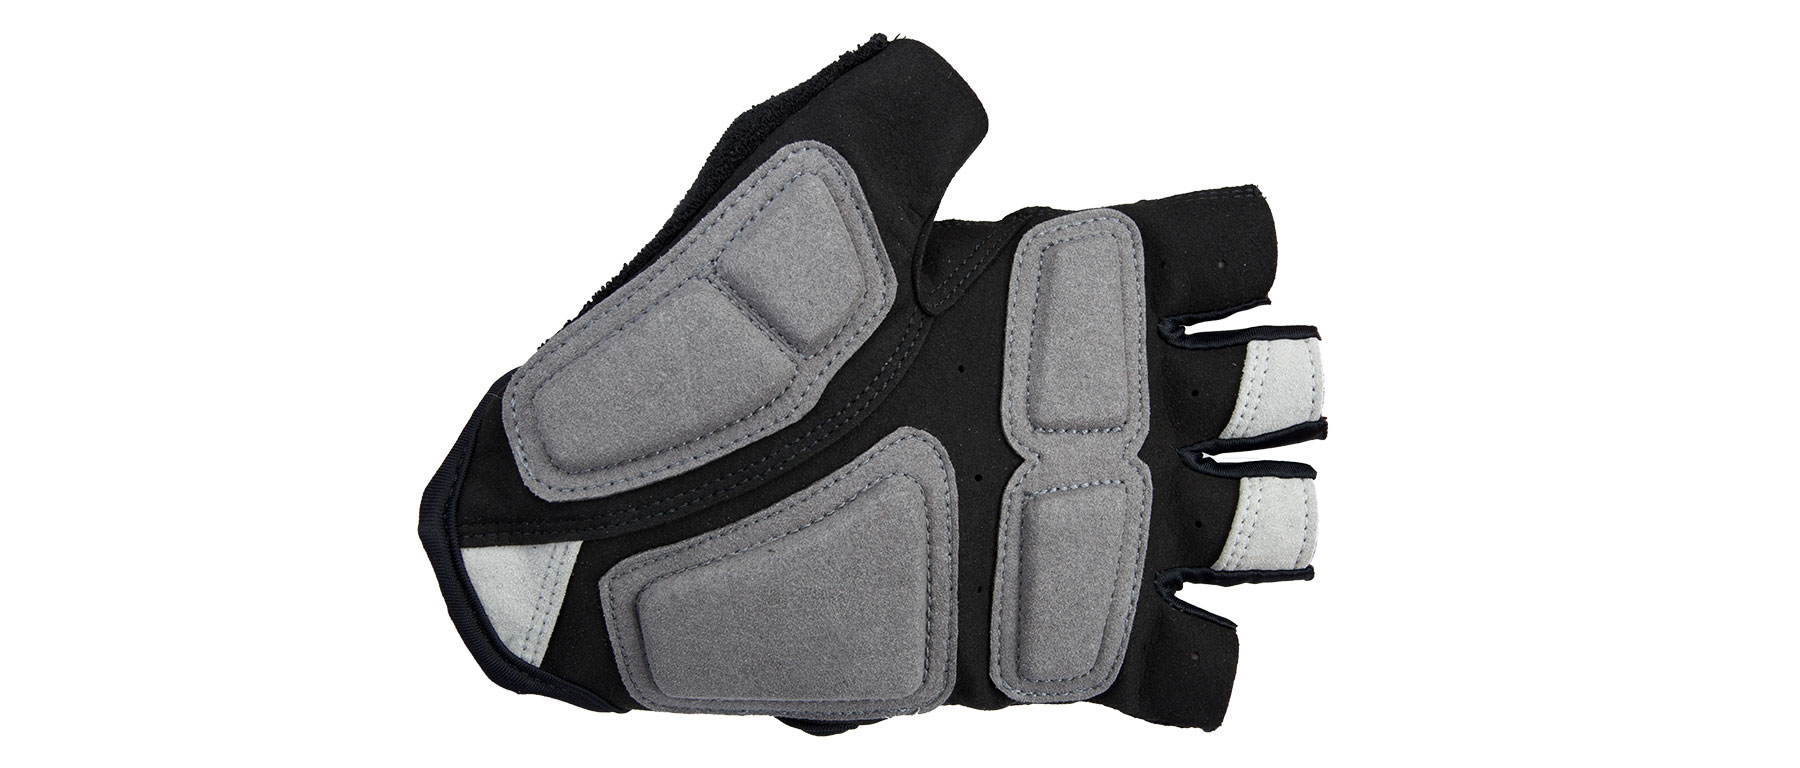 Pearl Izumi Select Glove